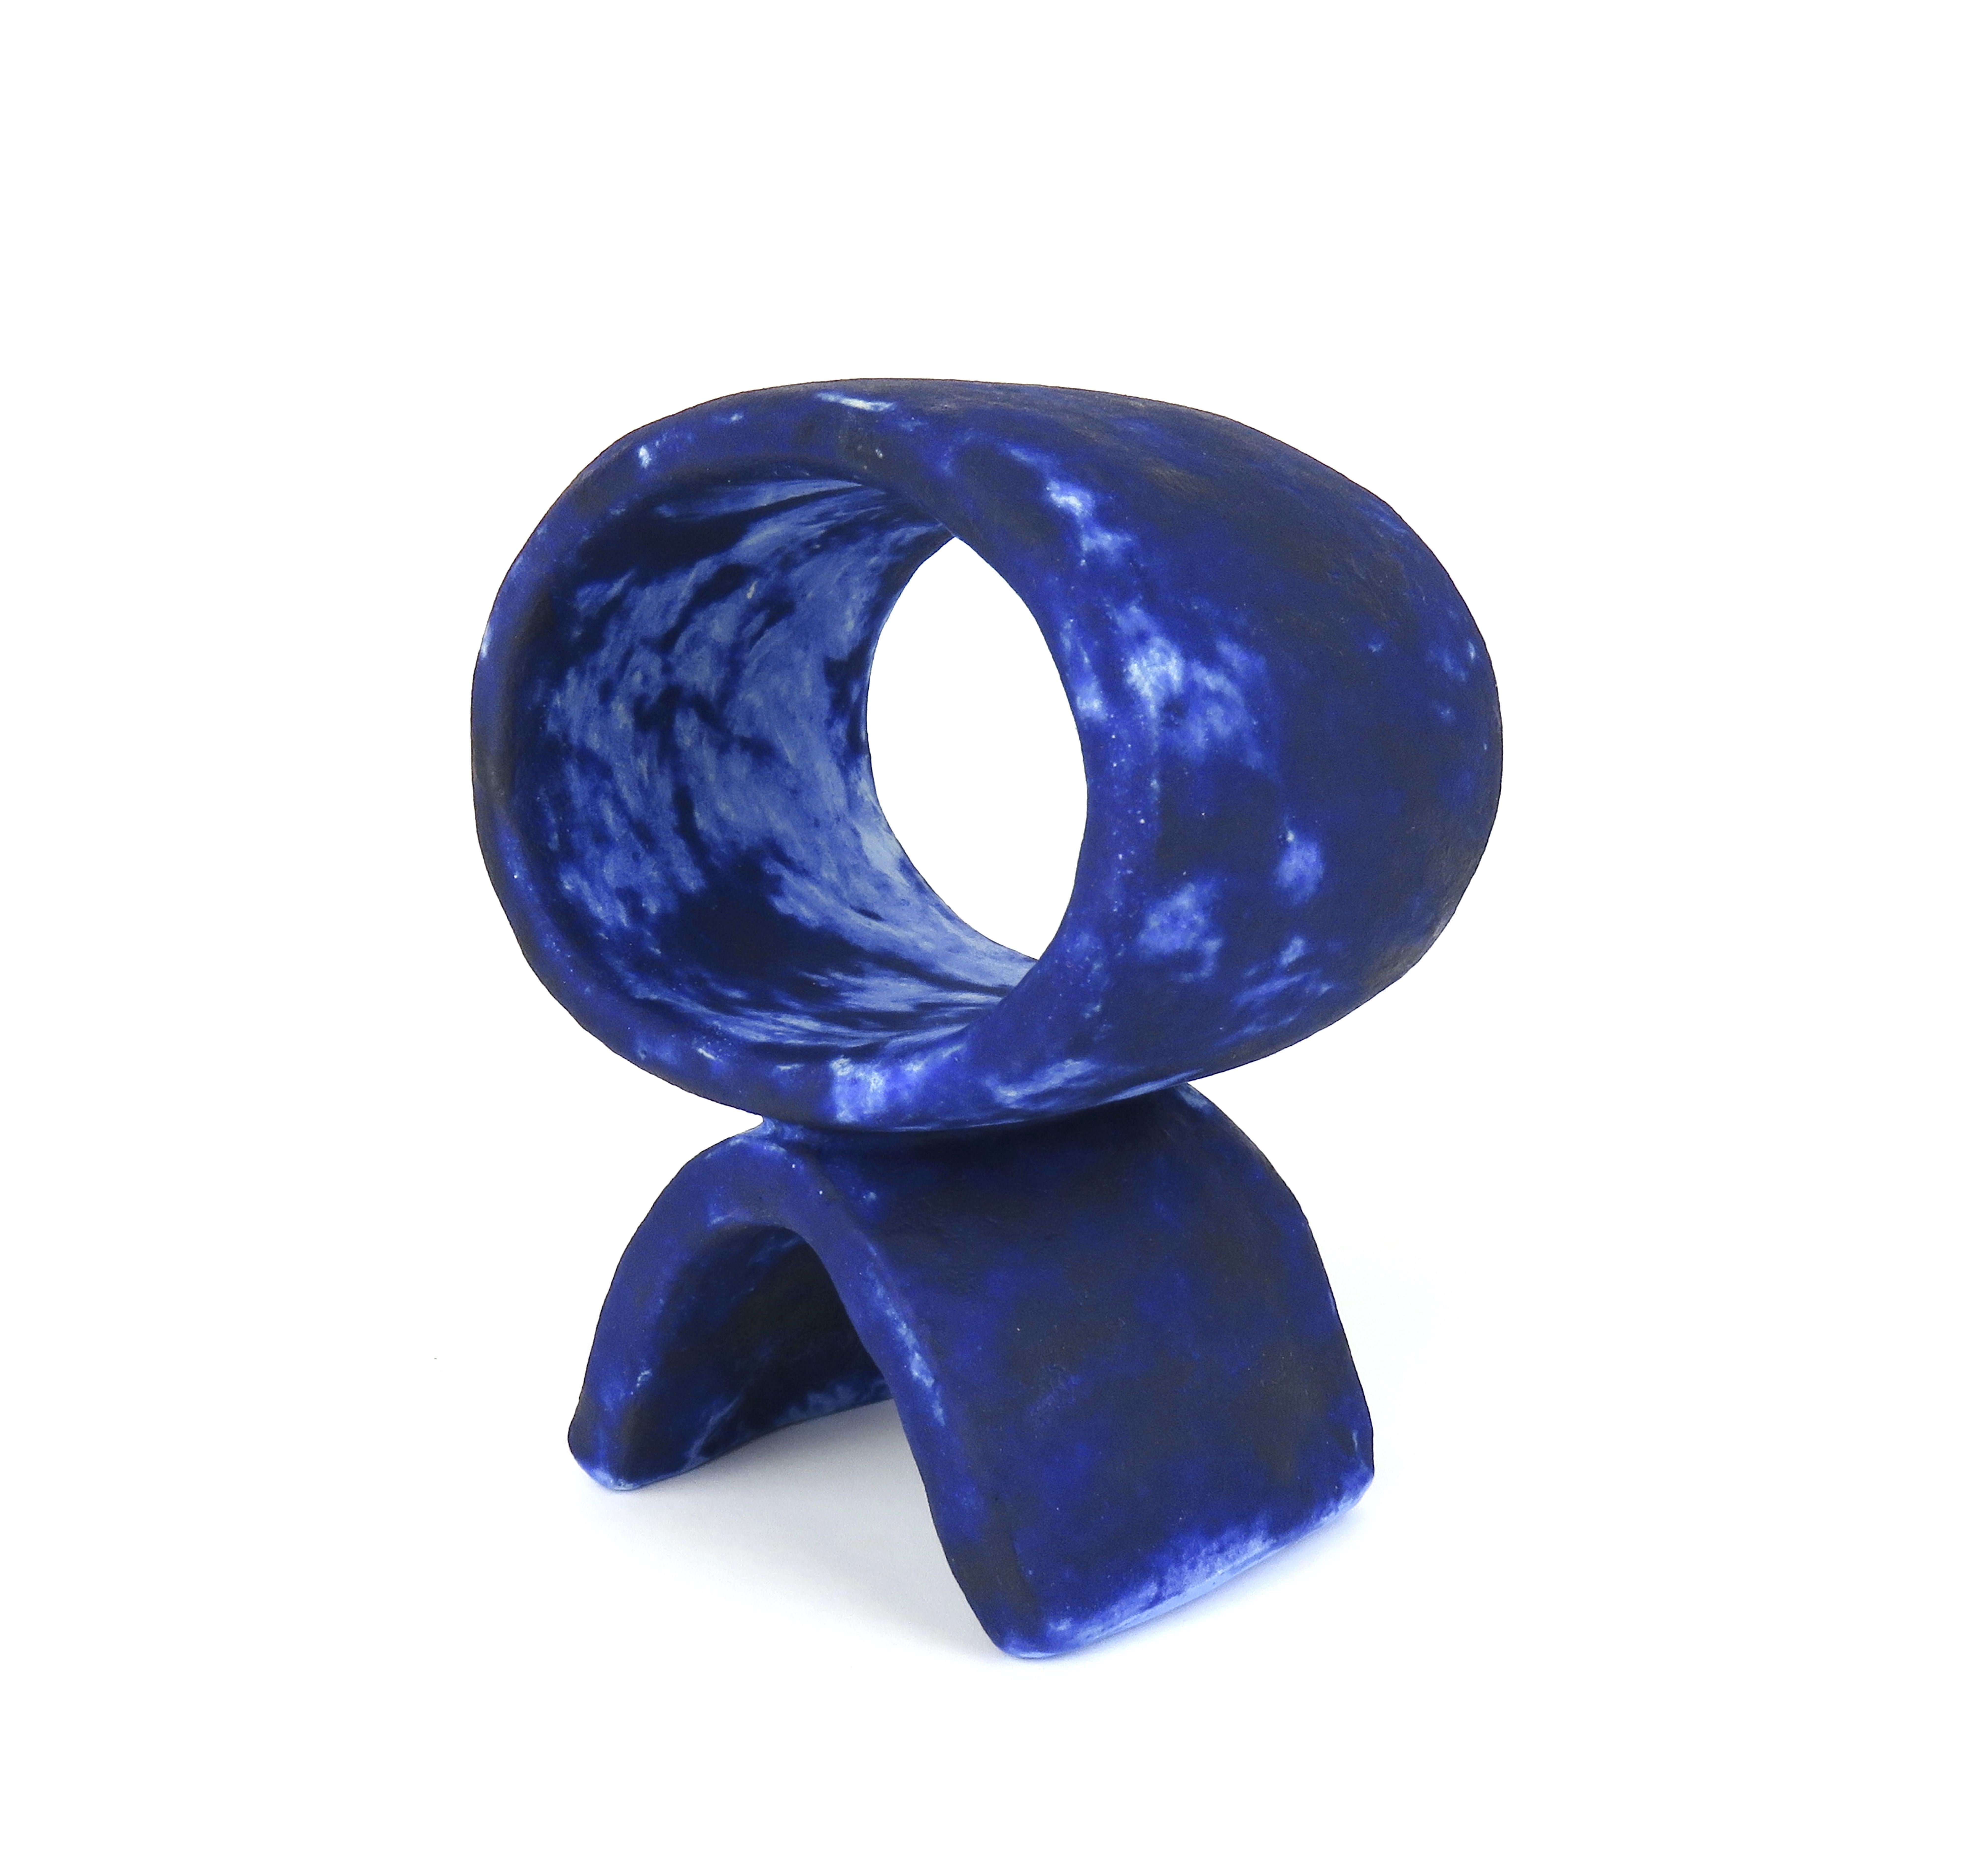 Mottled Deep Blue Handgefertigtes Keramik-Totem, breites Oval auf geschwungenem Fuß